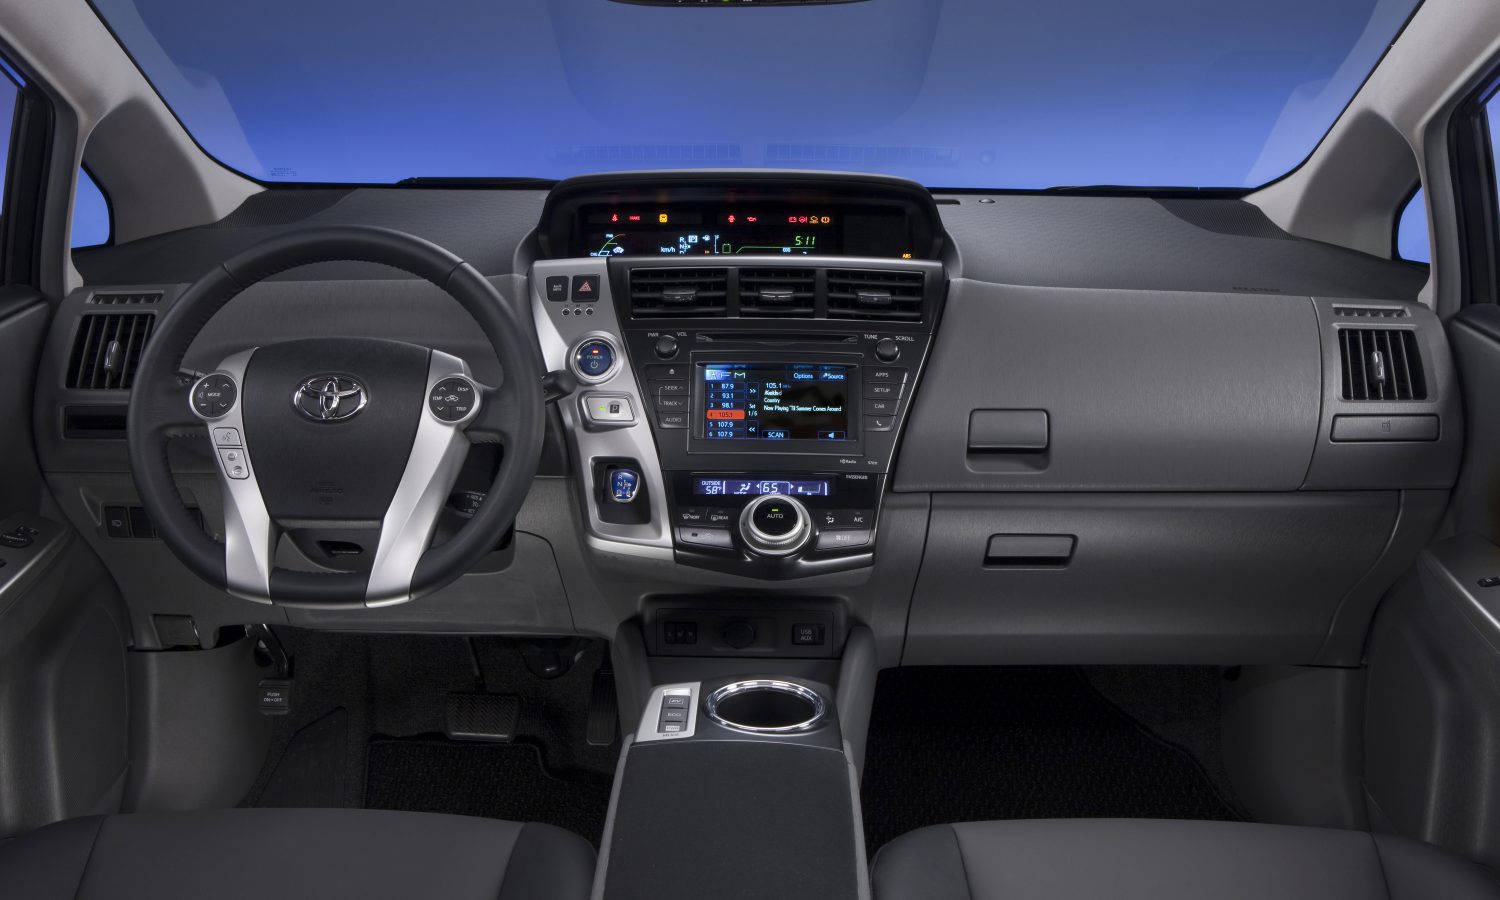 2011 NAIAS - Toyota Prius v 060 - Toyota USA Newsroom